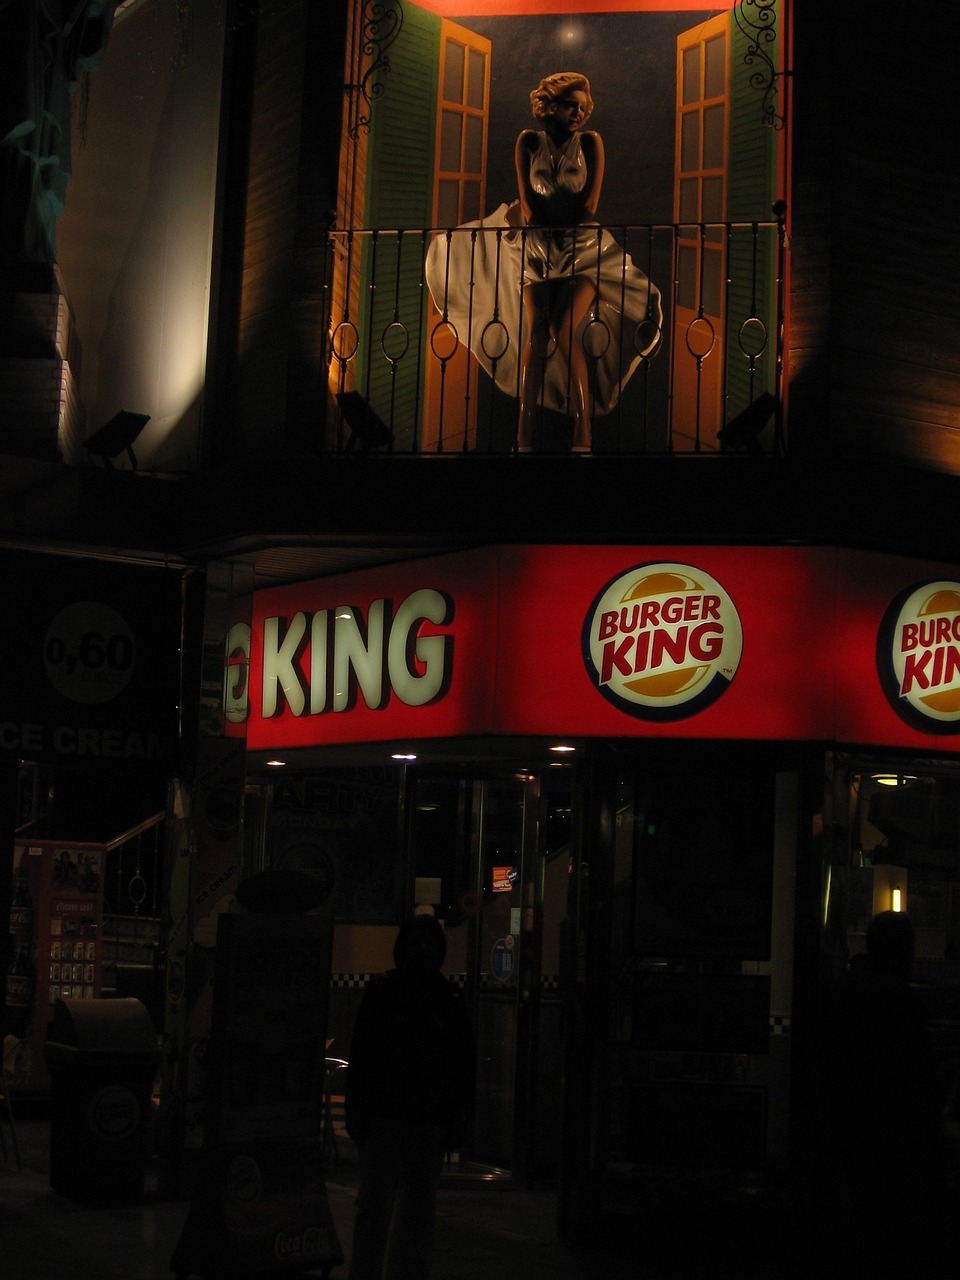 franchise burger king